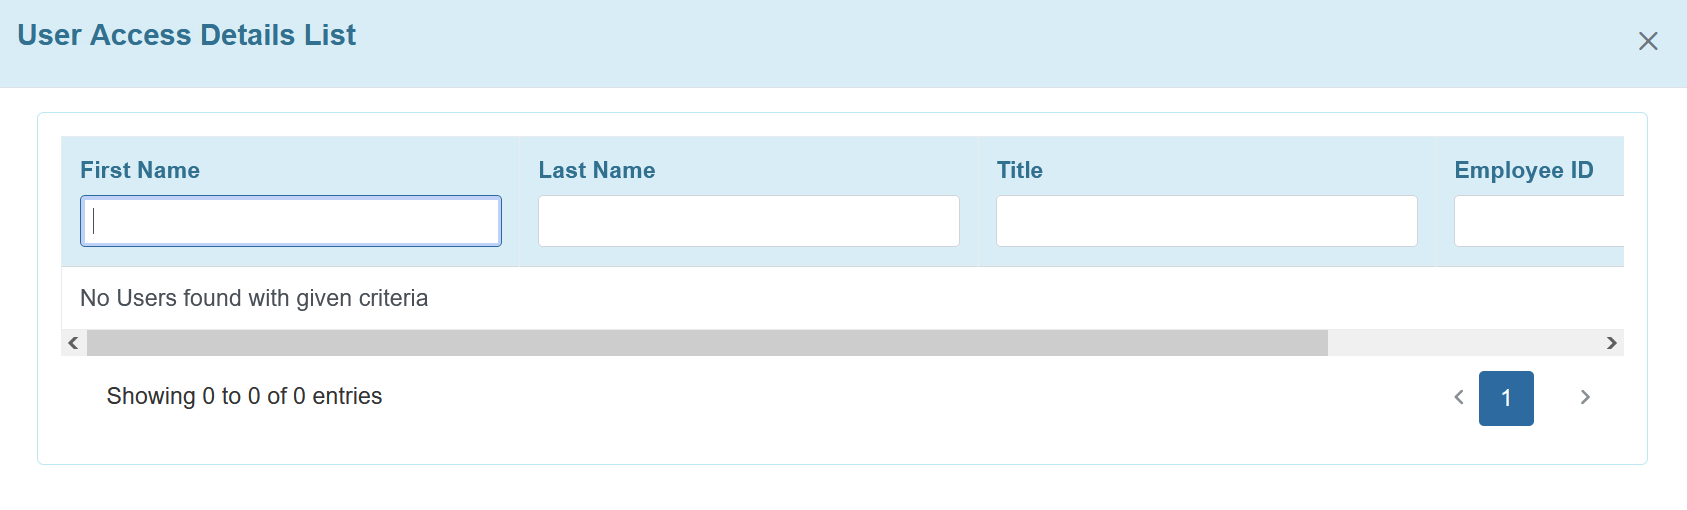 Screenshot showing the empty User Access Details List